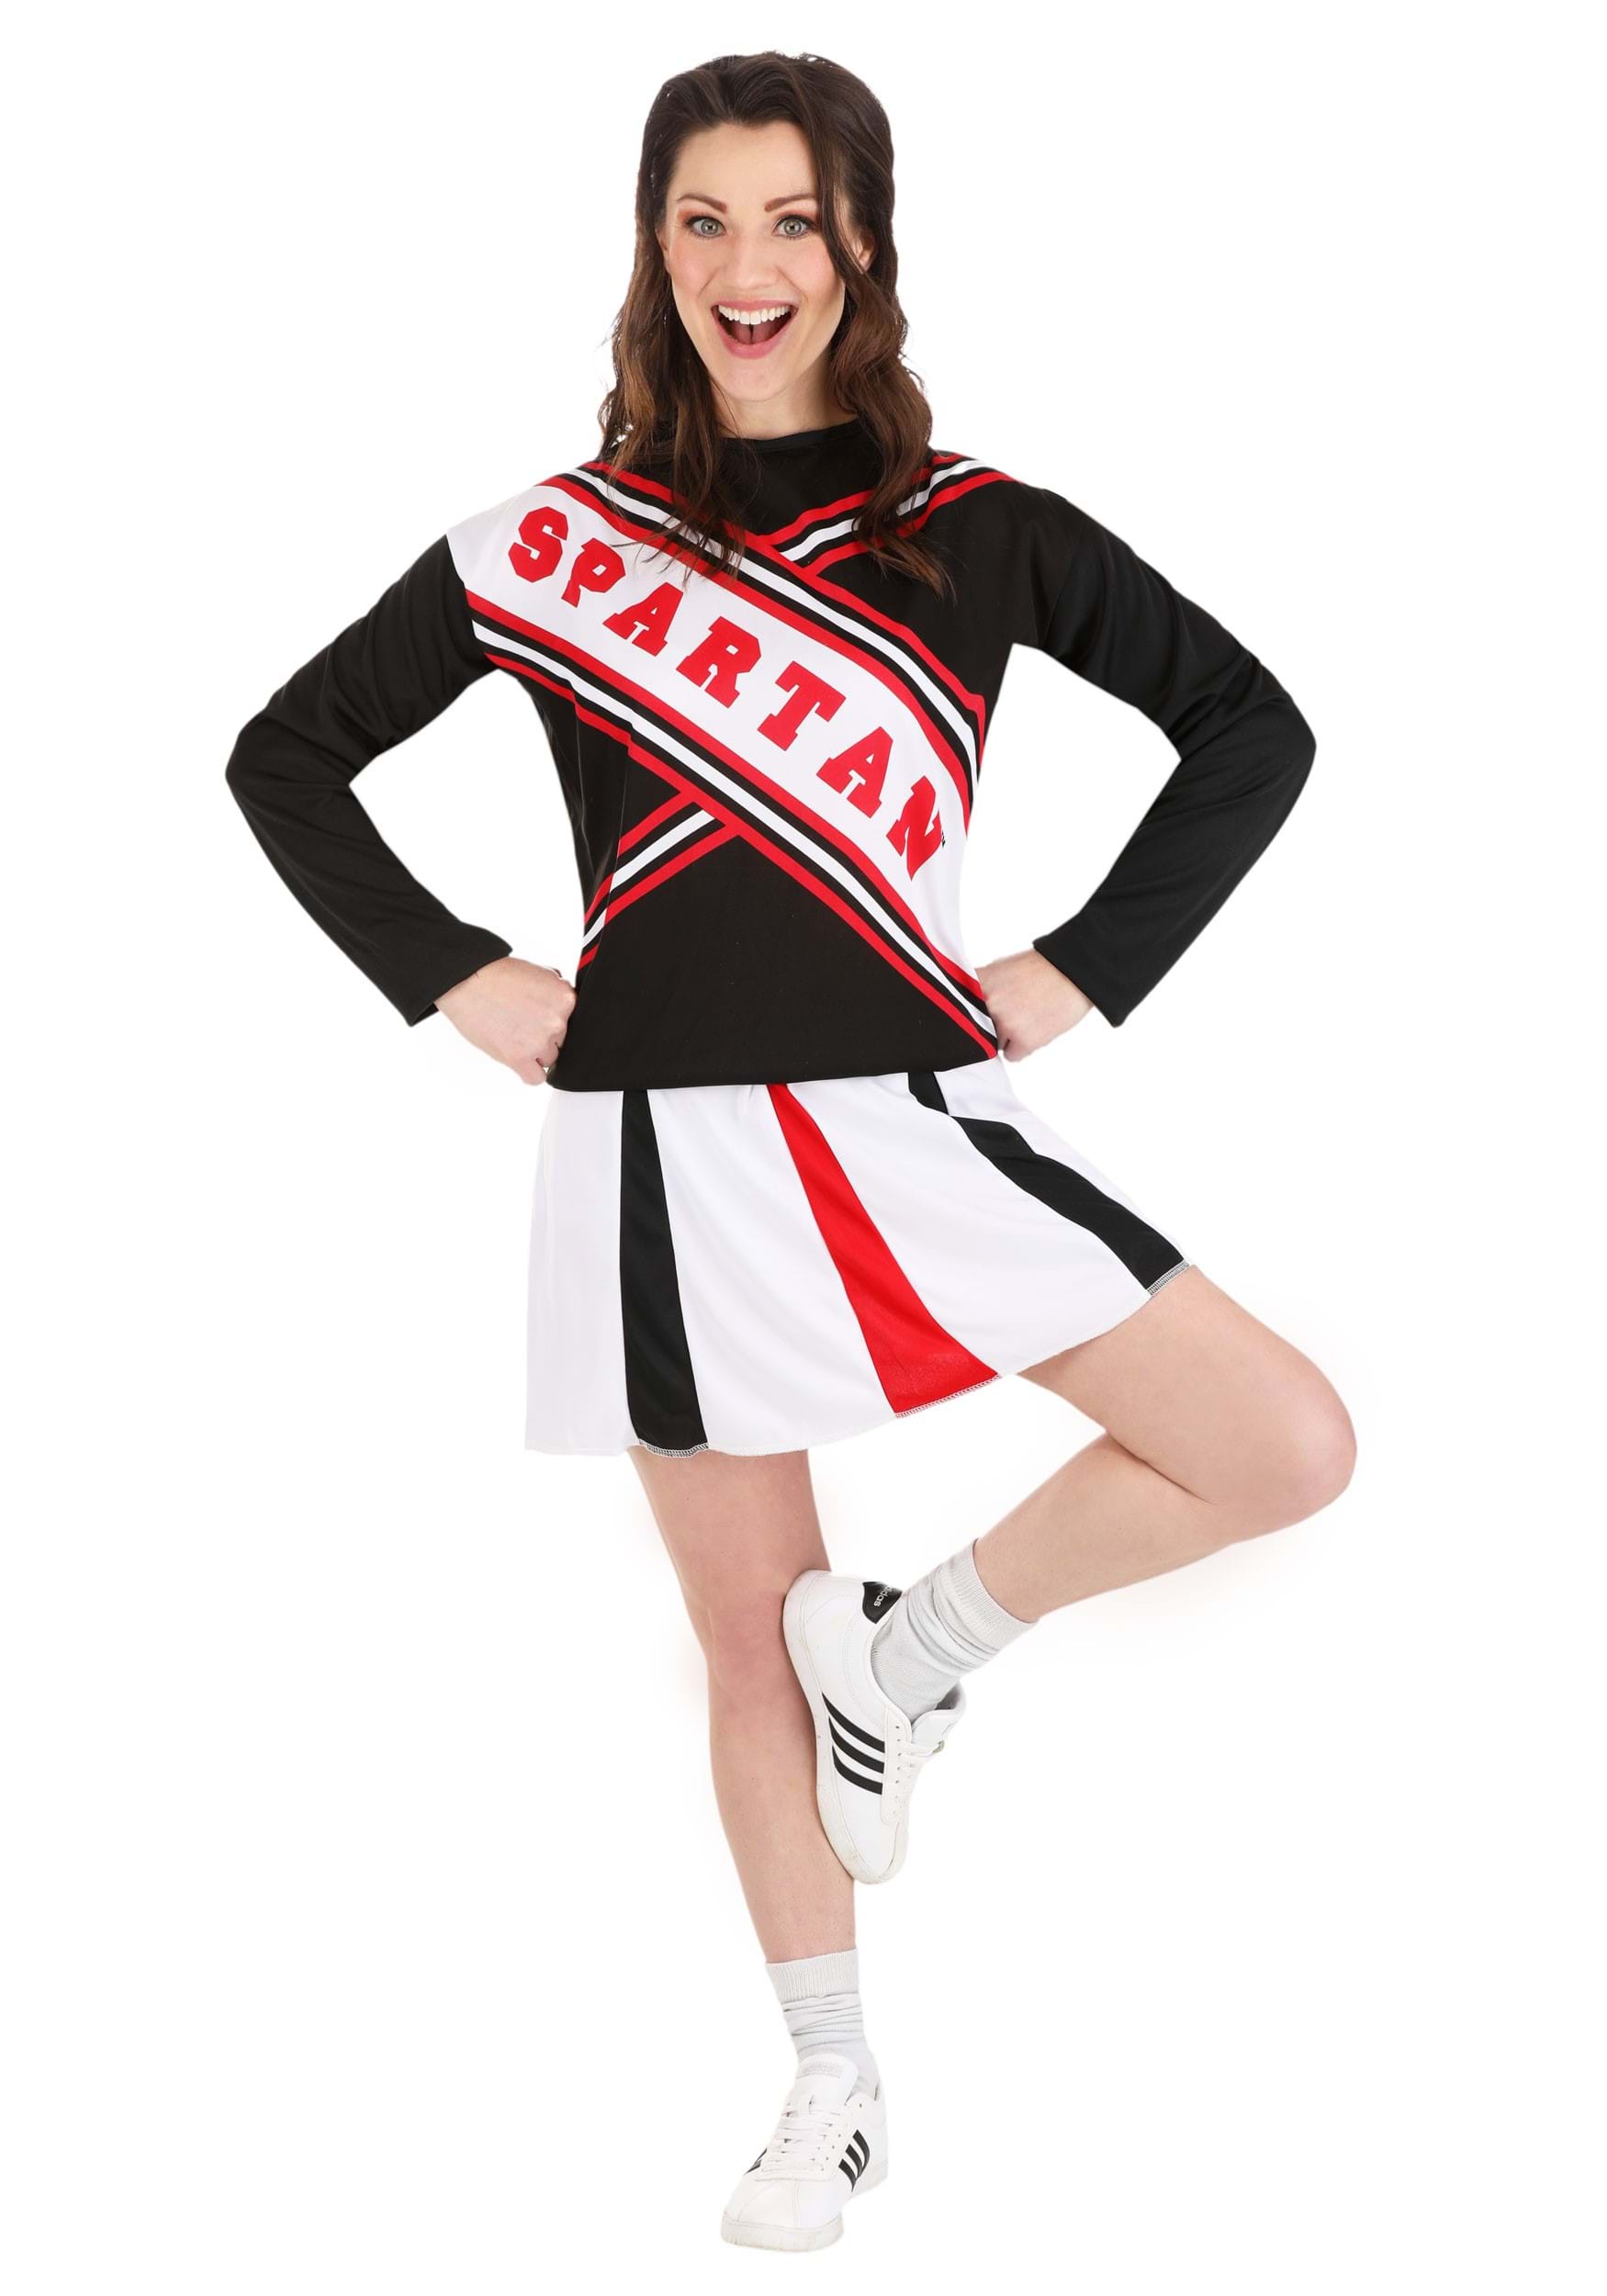 Photos - Fancy Dress Spartan FUN Costumes Women's Saturday Night Live  Female Cheerleader Fancy 